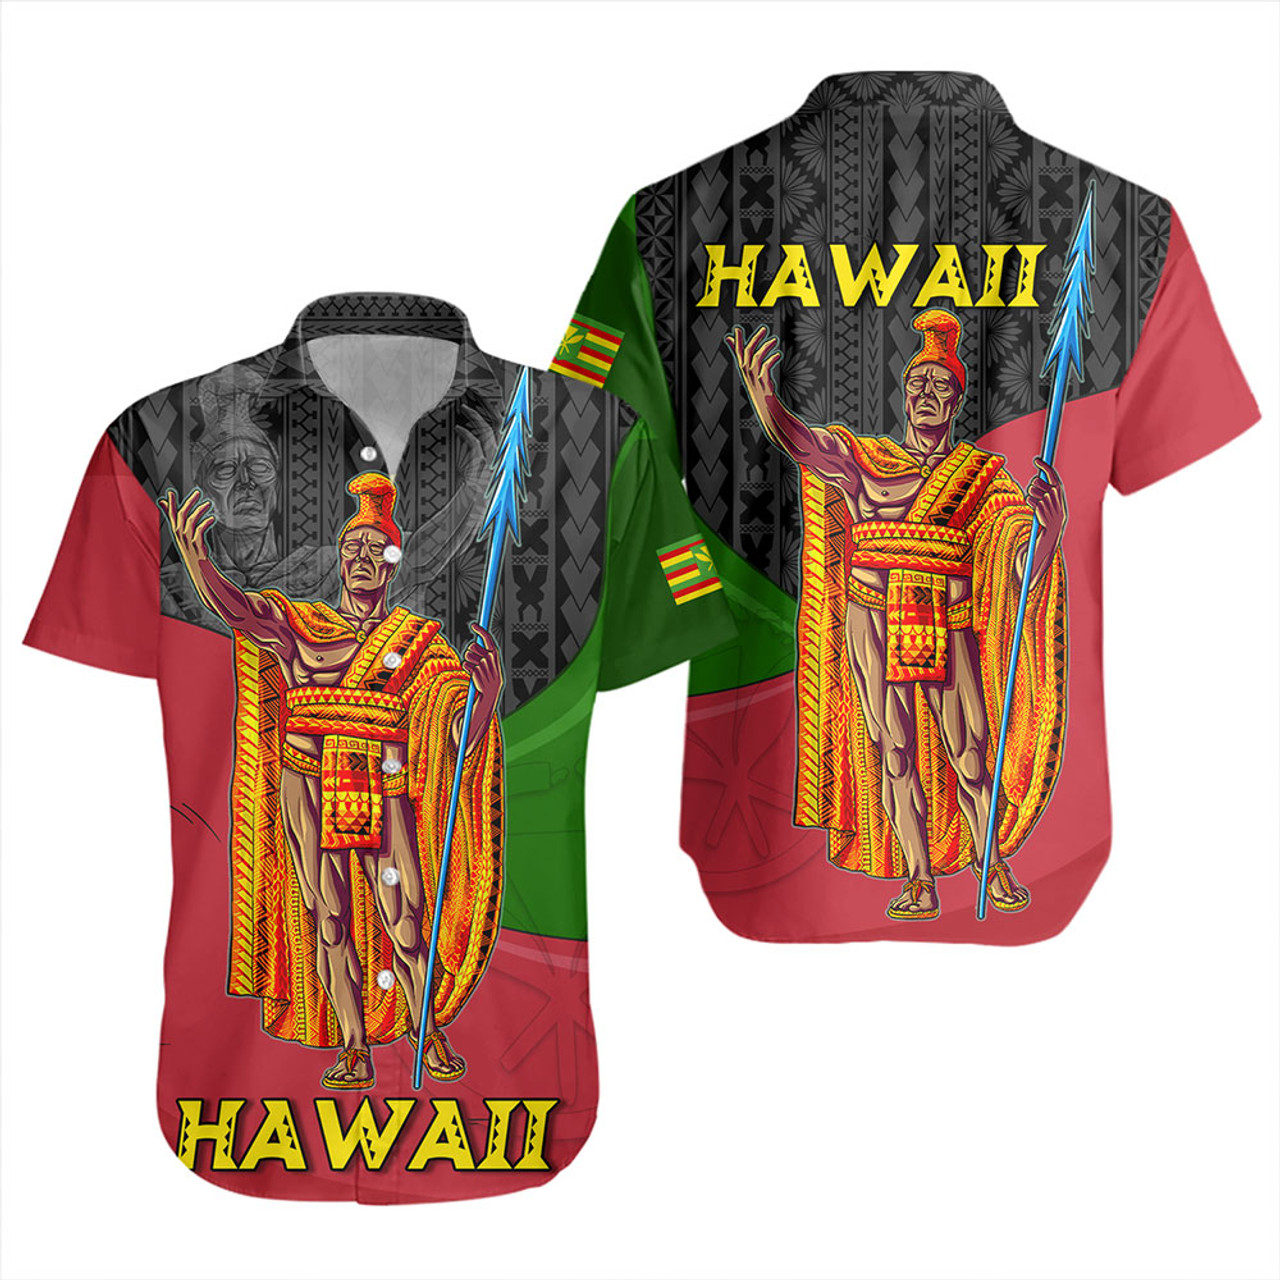 Hawaii Short Sleeve Shirt Hawaii King With Map And Flag Tribal Patterns